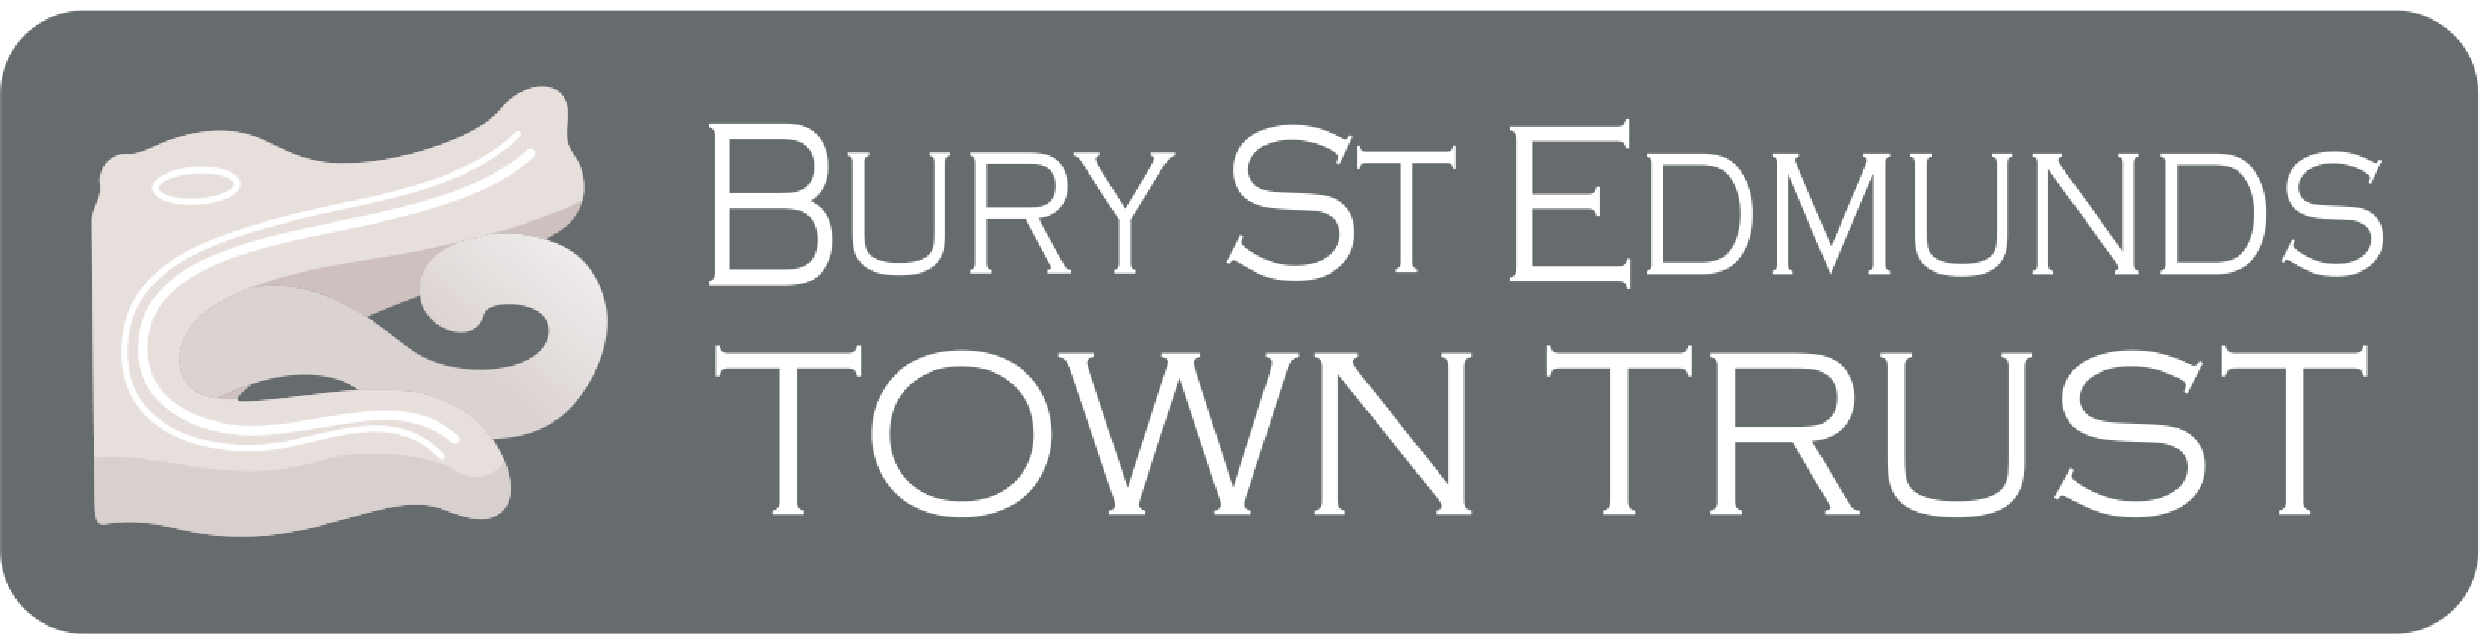 Bury Town Trust - A5 png LOGO - 22.05.20